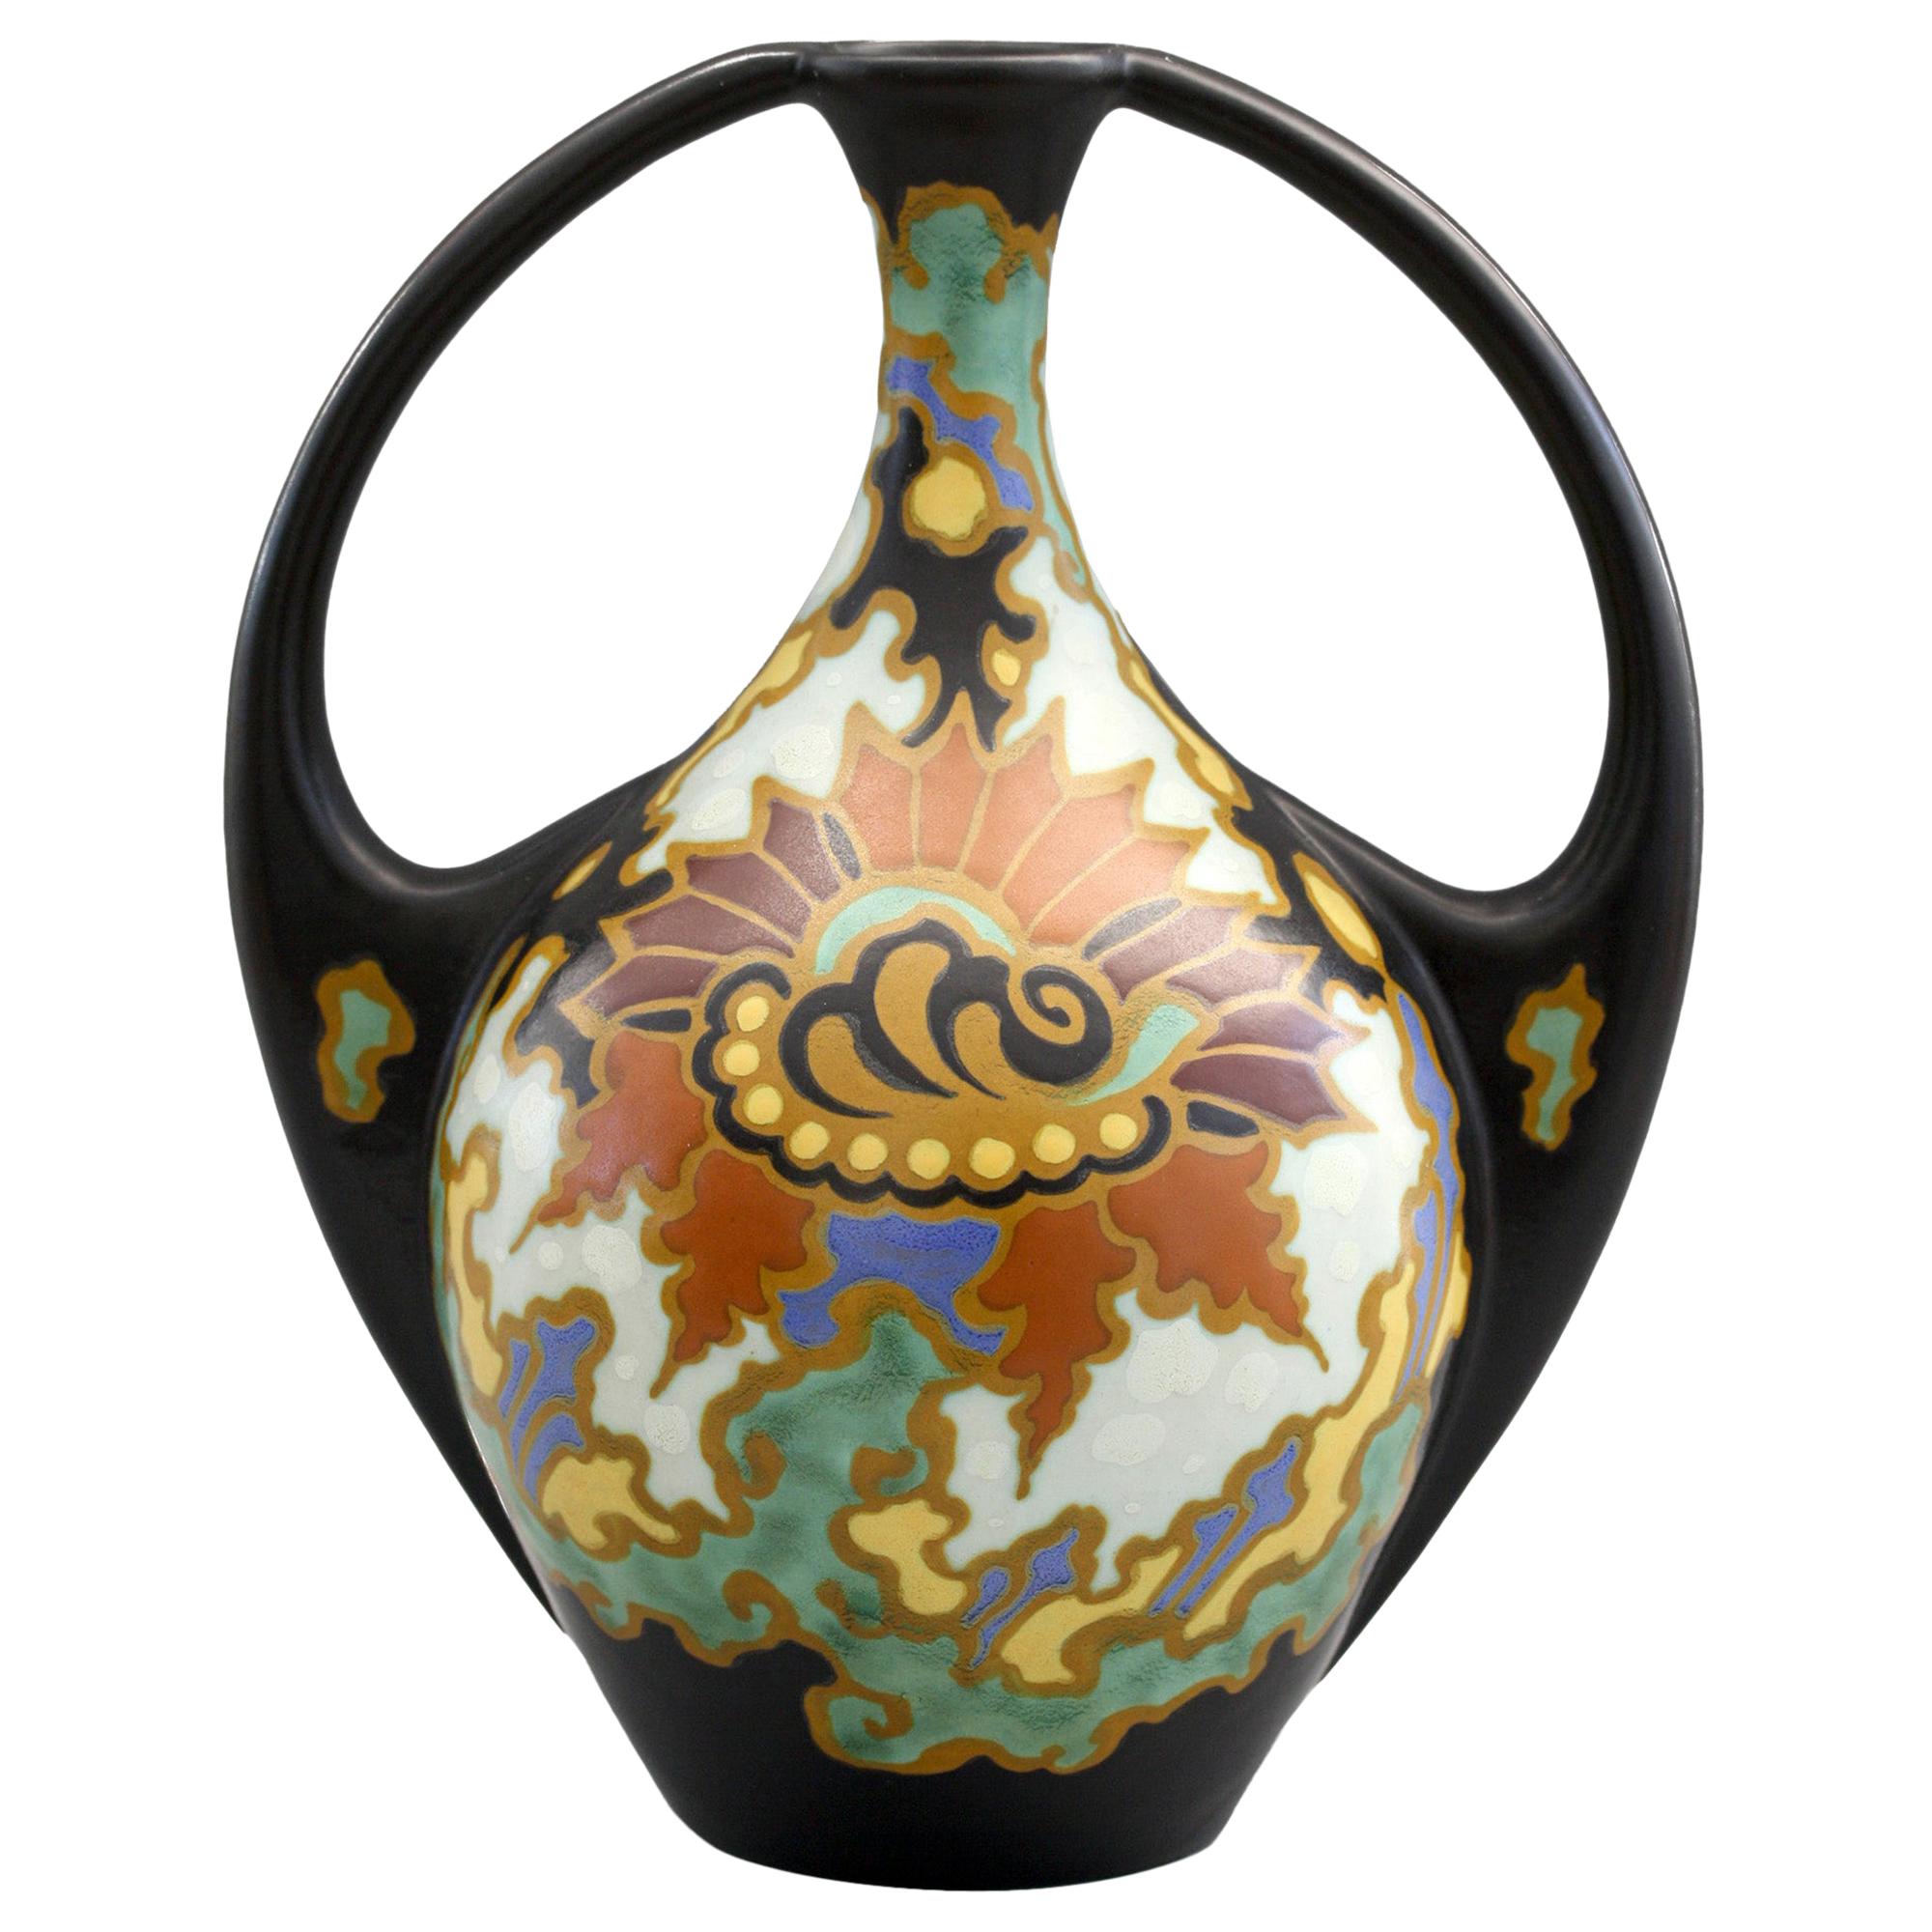 Gouda Regina Twin Handled Presto Pattern Art Pottery Vase by Steef Bowers c.1927